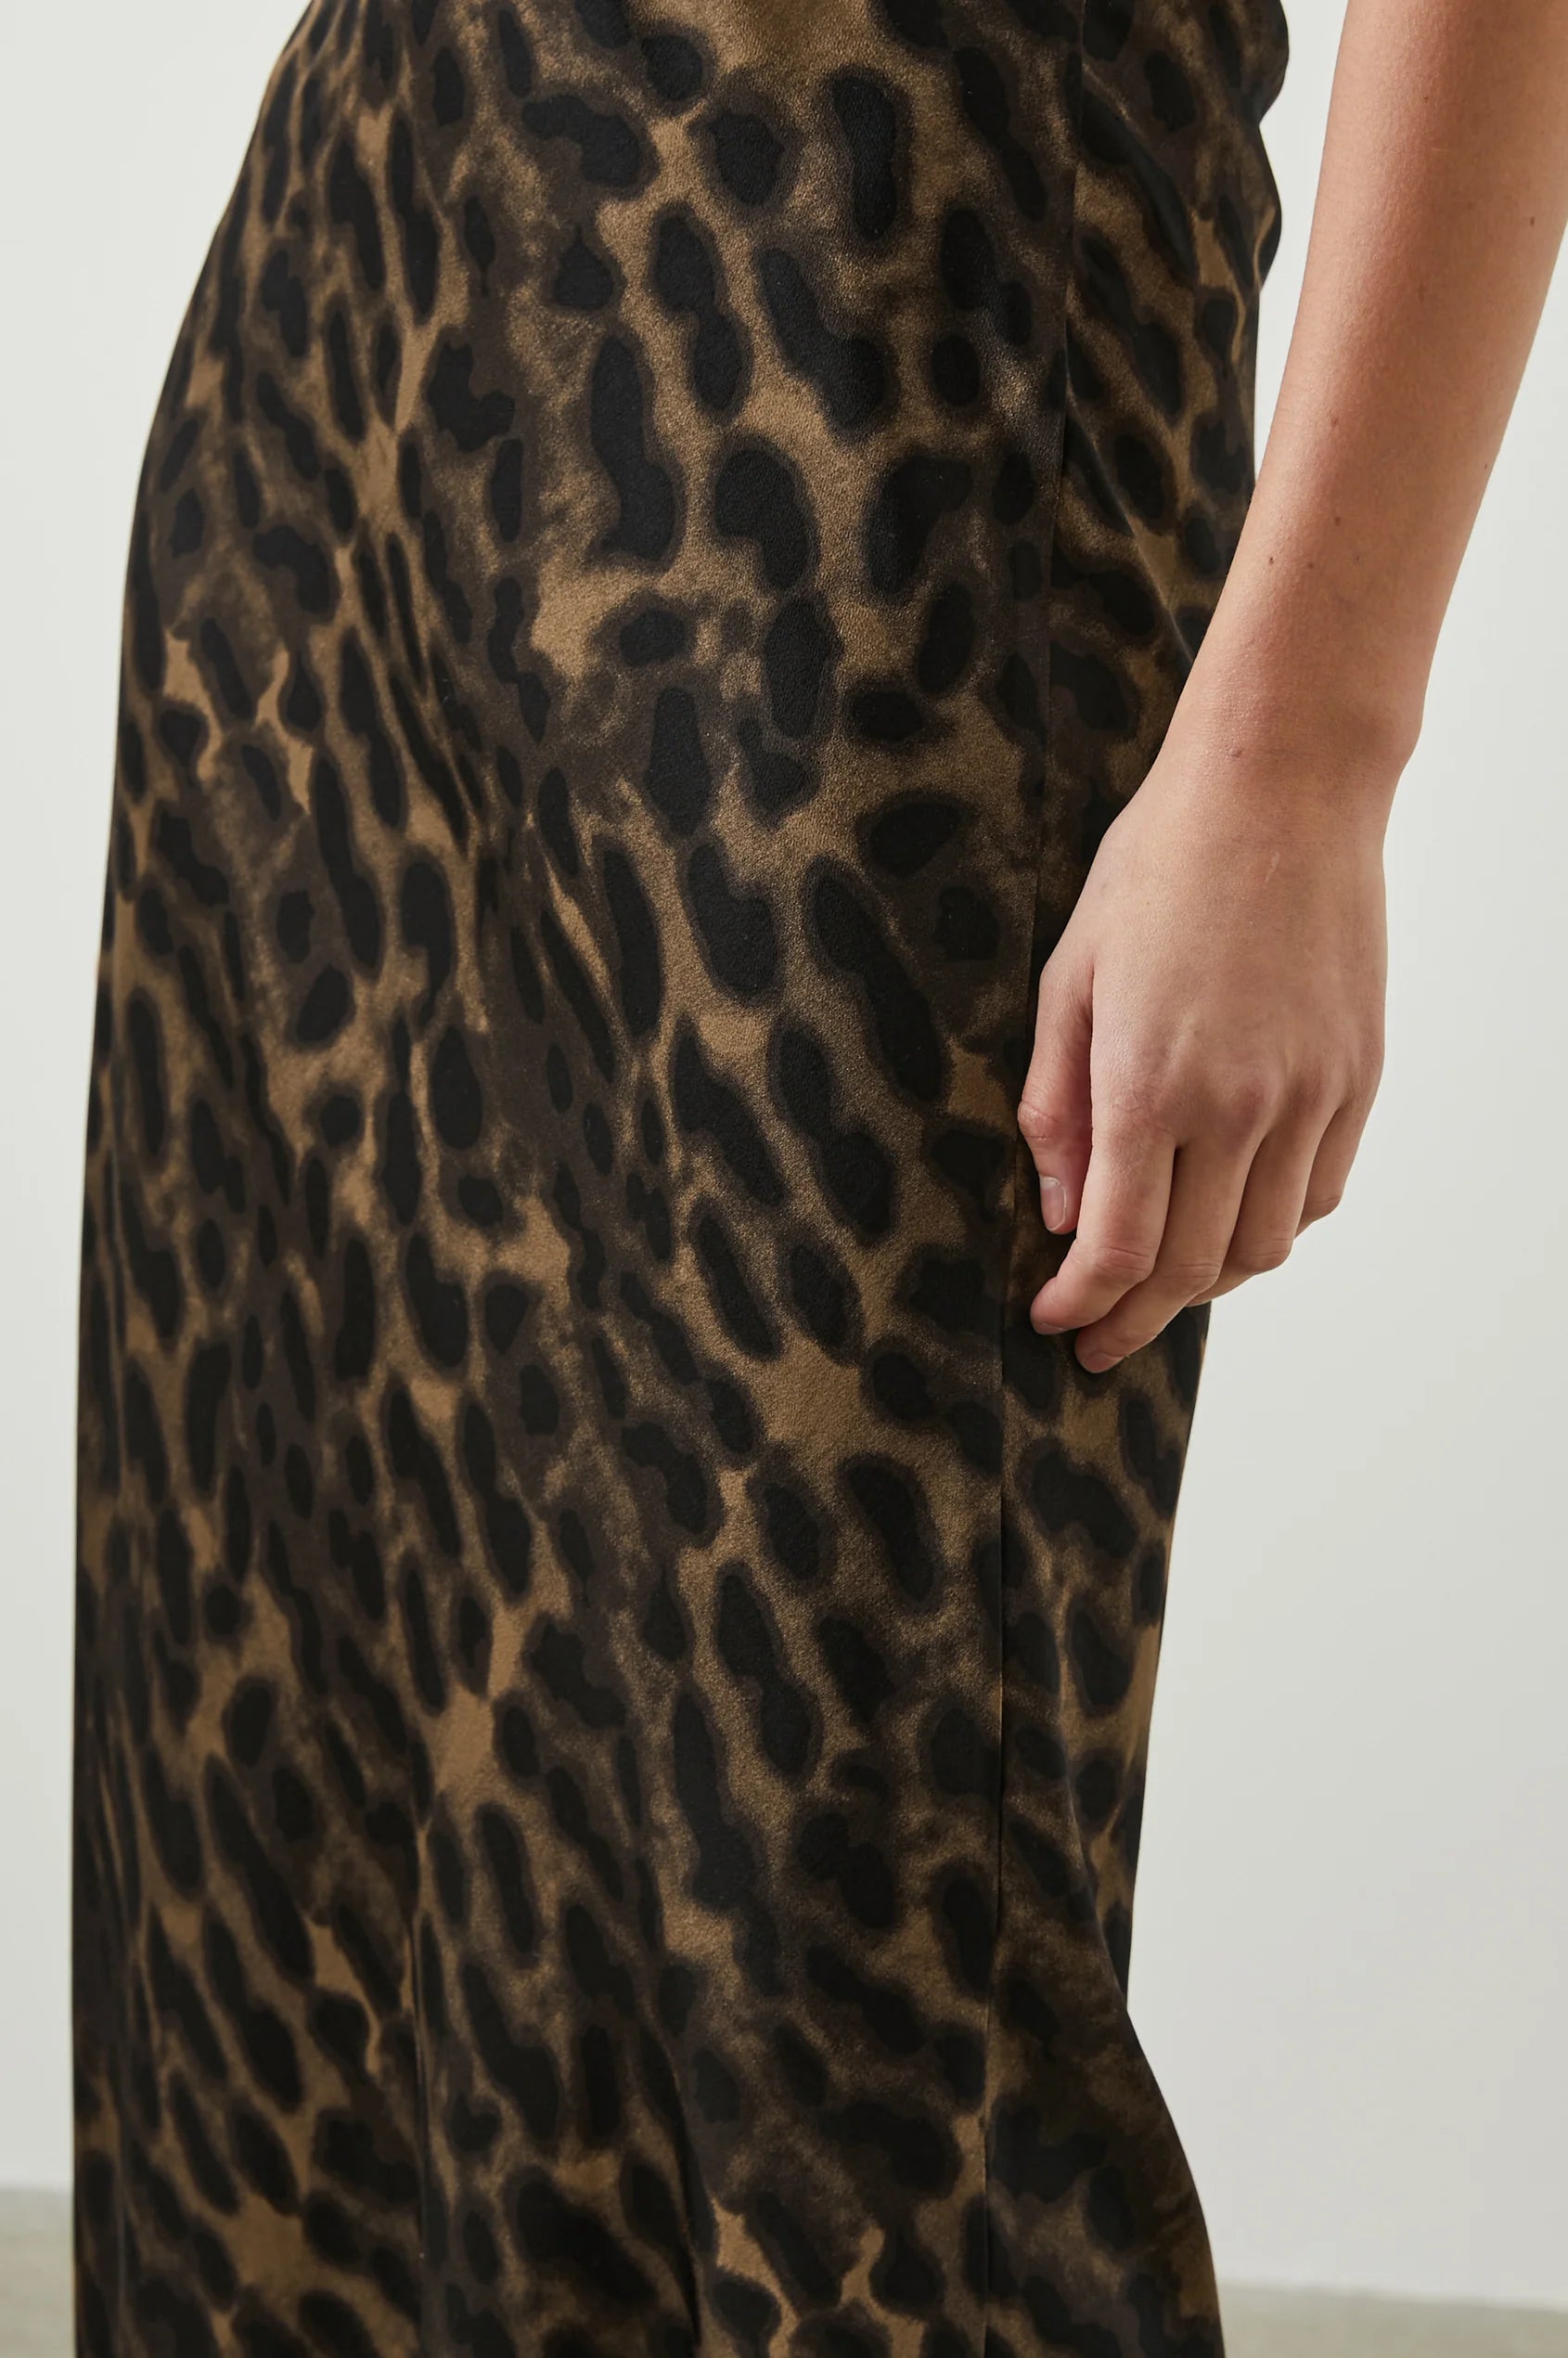 Leia Umber Leopard Skirt